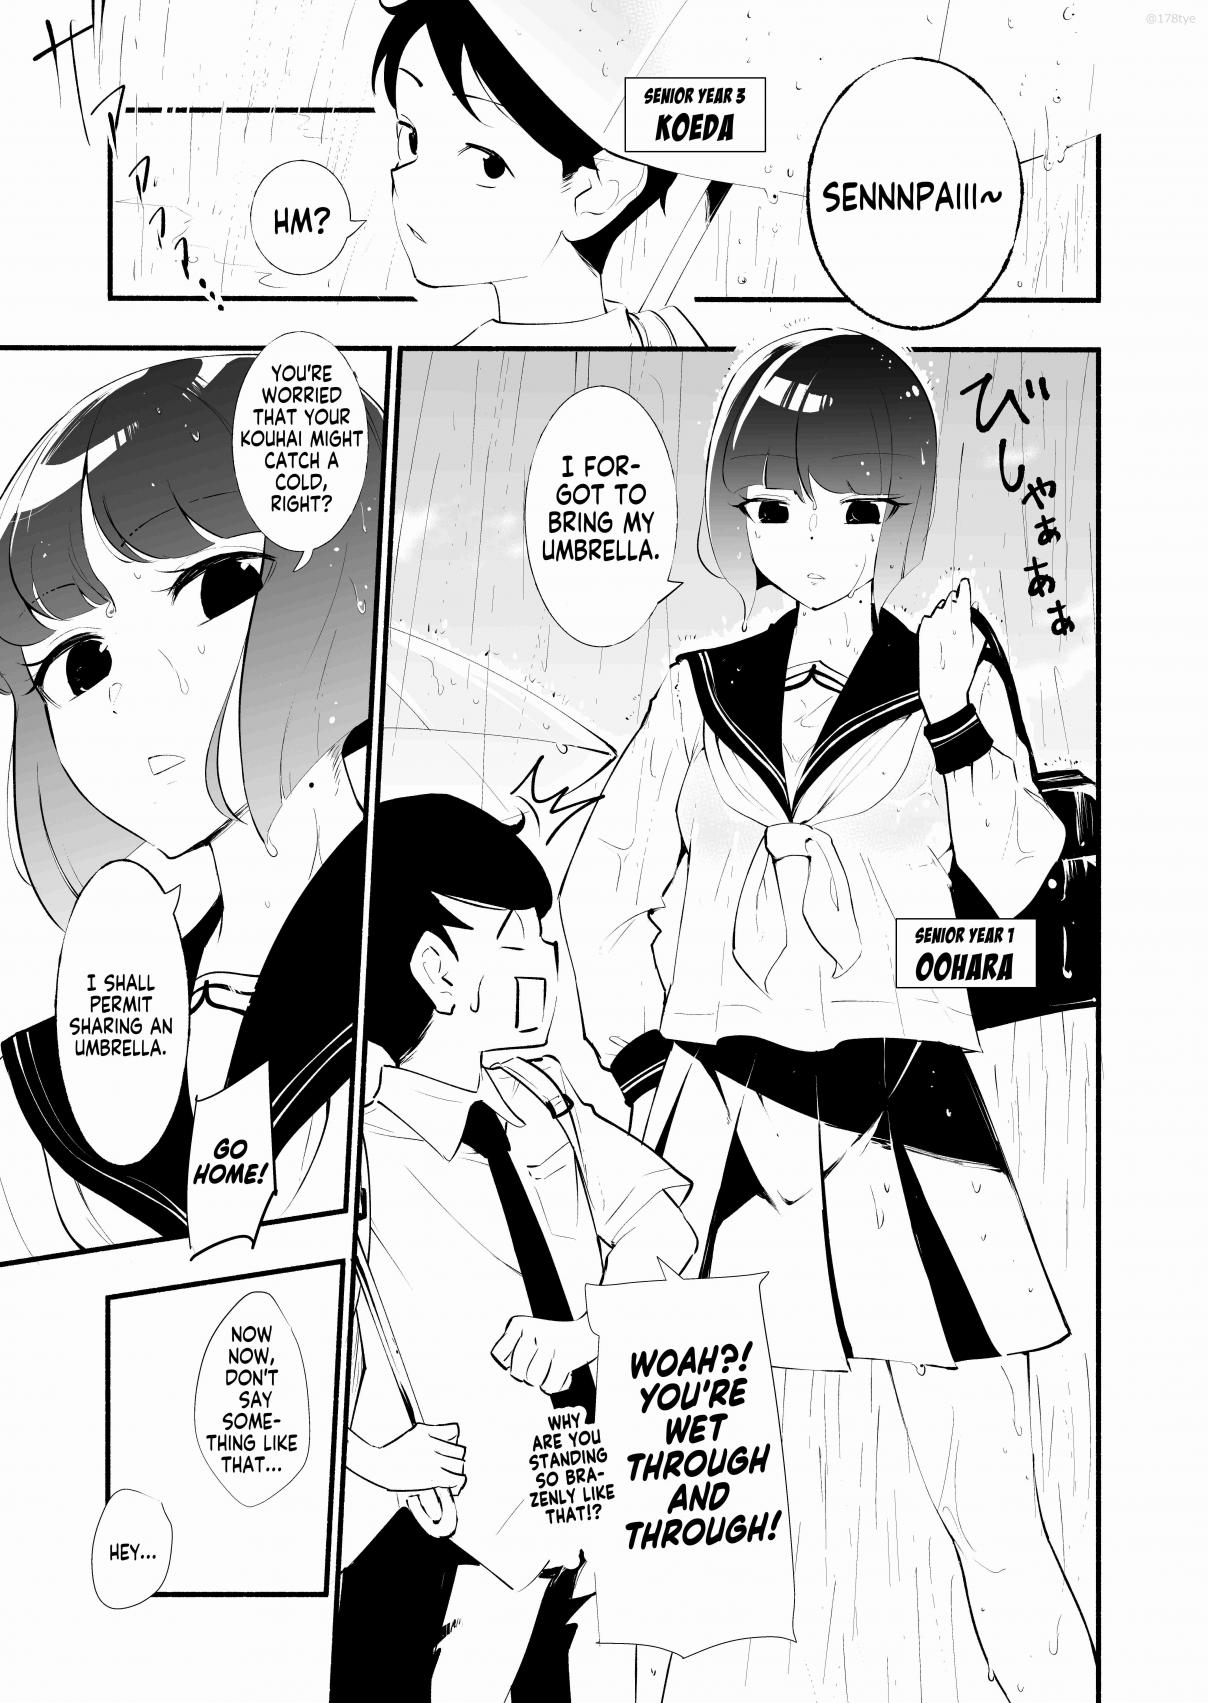 Until the Tall Kouhai (Girl) and the Short Senpai (Boy) Relationship Develops Into Romance Vol. 1 Ch. 4 Sharin an Umbrella & the Secret